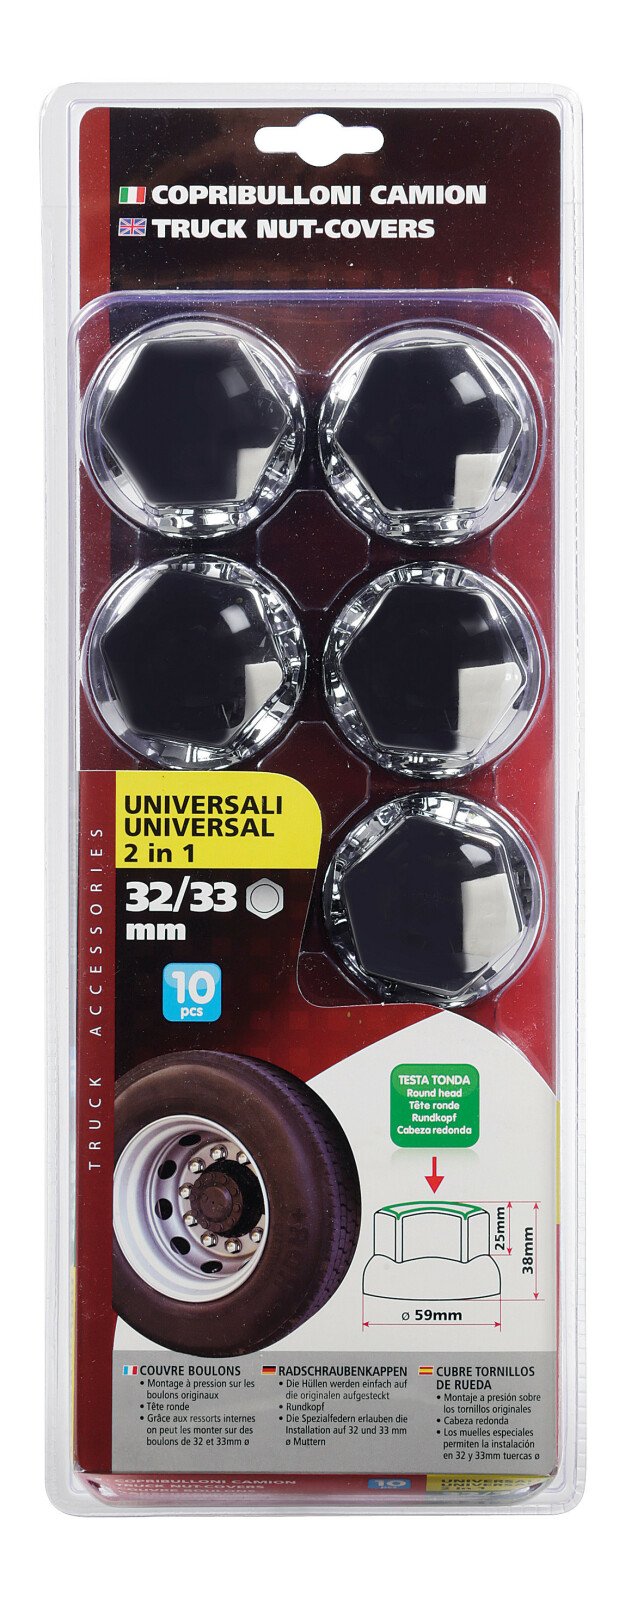 ABS universal truck nut-covers, 10 pcs set - Ø 32/33 mm - Chrome thumb